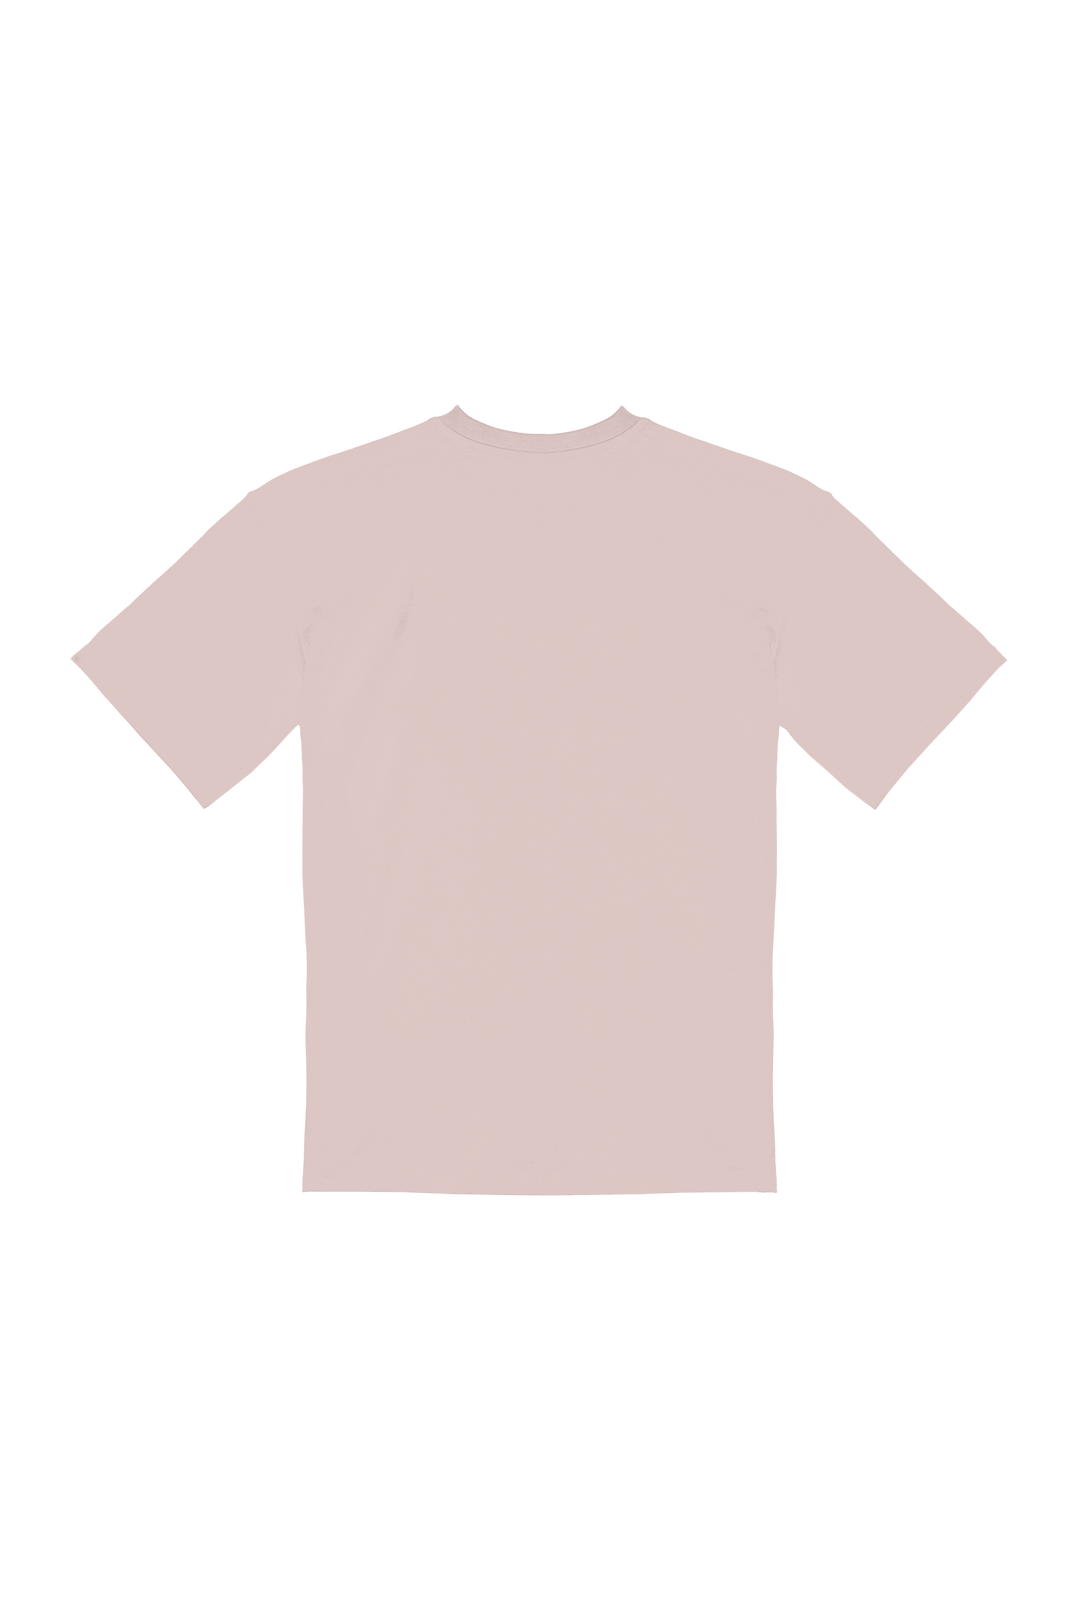 BAMBOCHE・T-shirt unisexe・Rose poudré